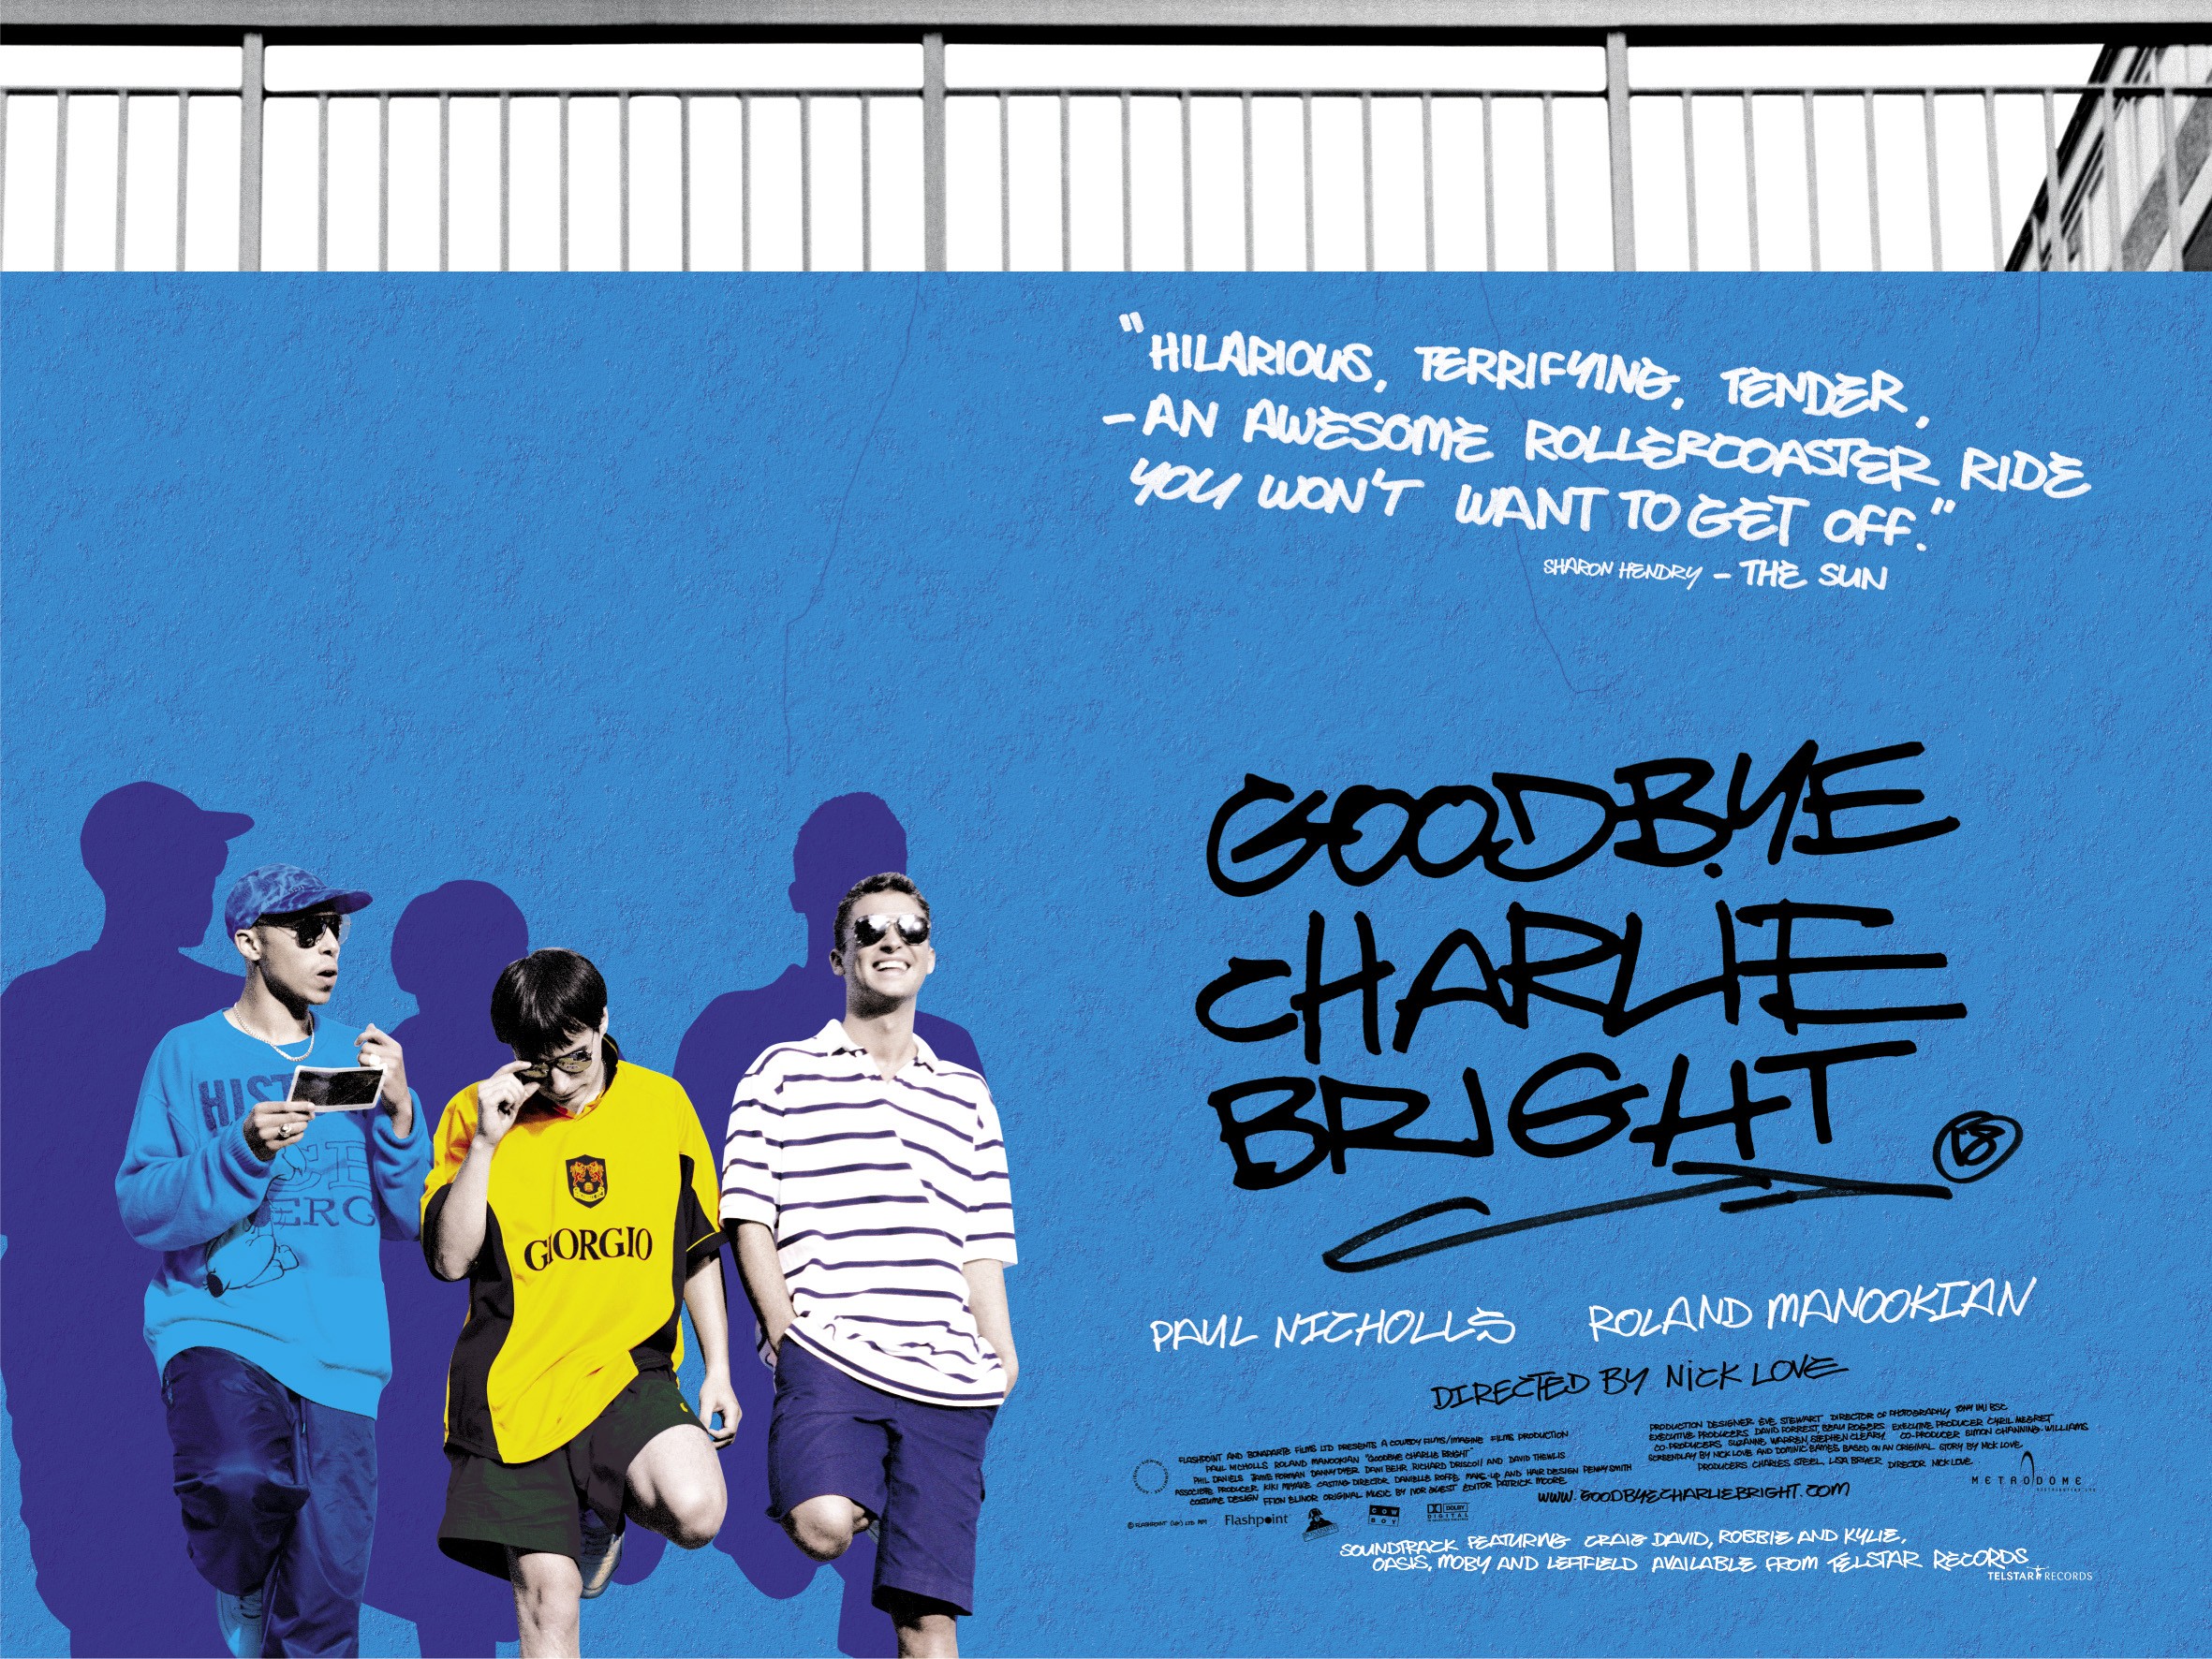 Mega Sized Movie Poster Image for Goodbye Charlie Bright 